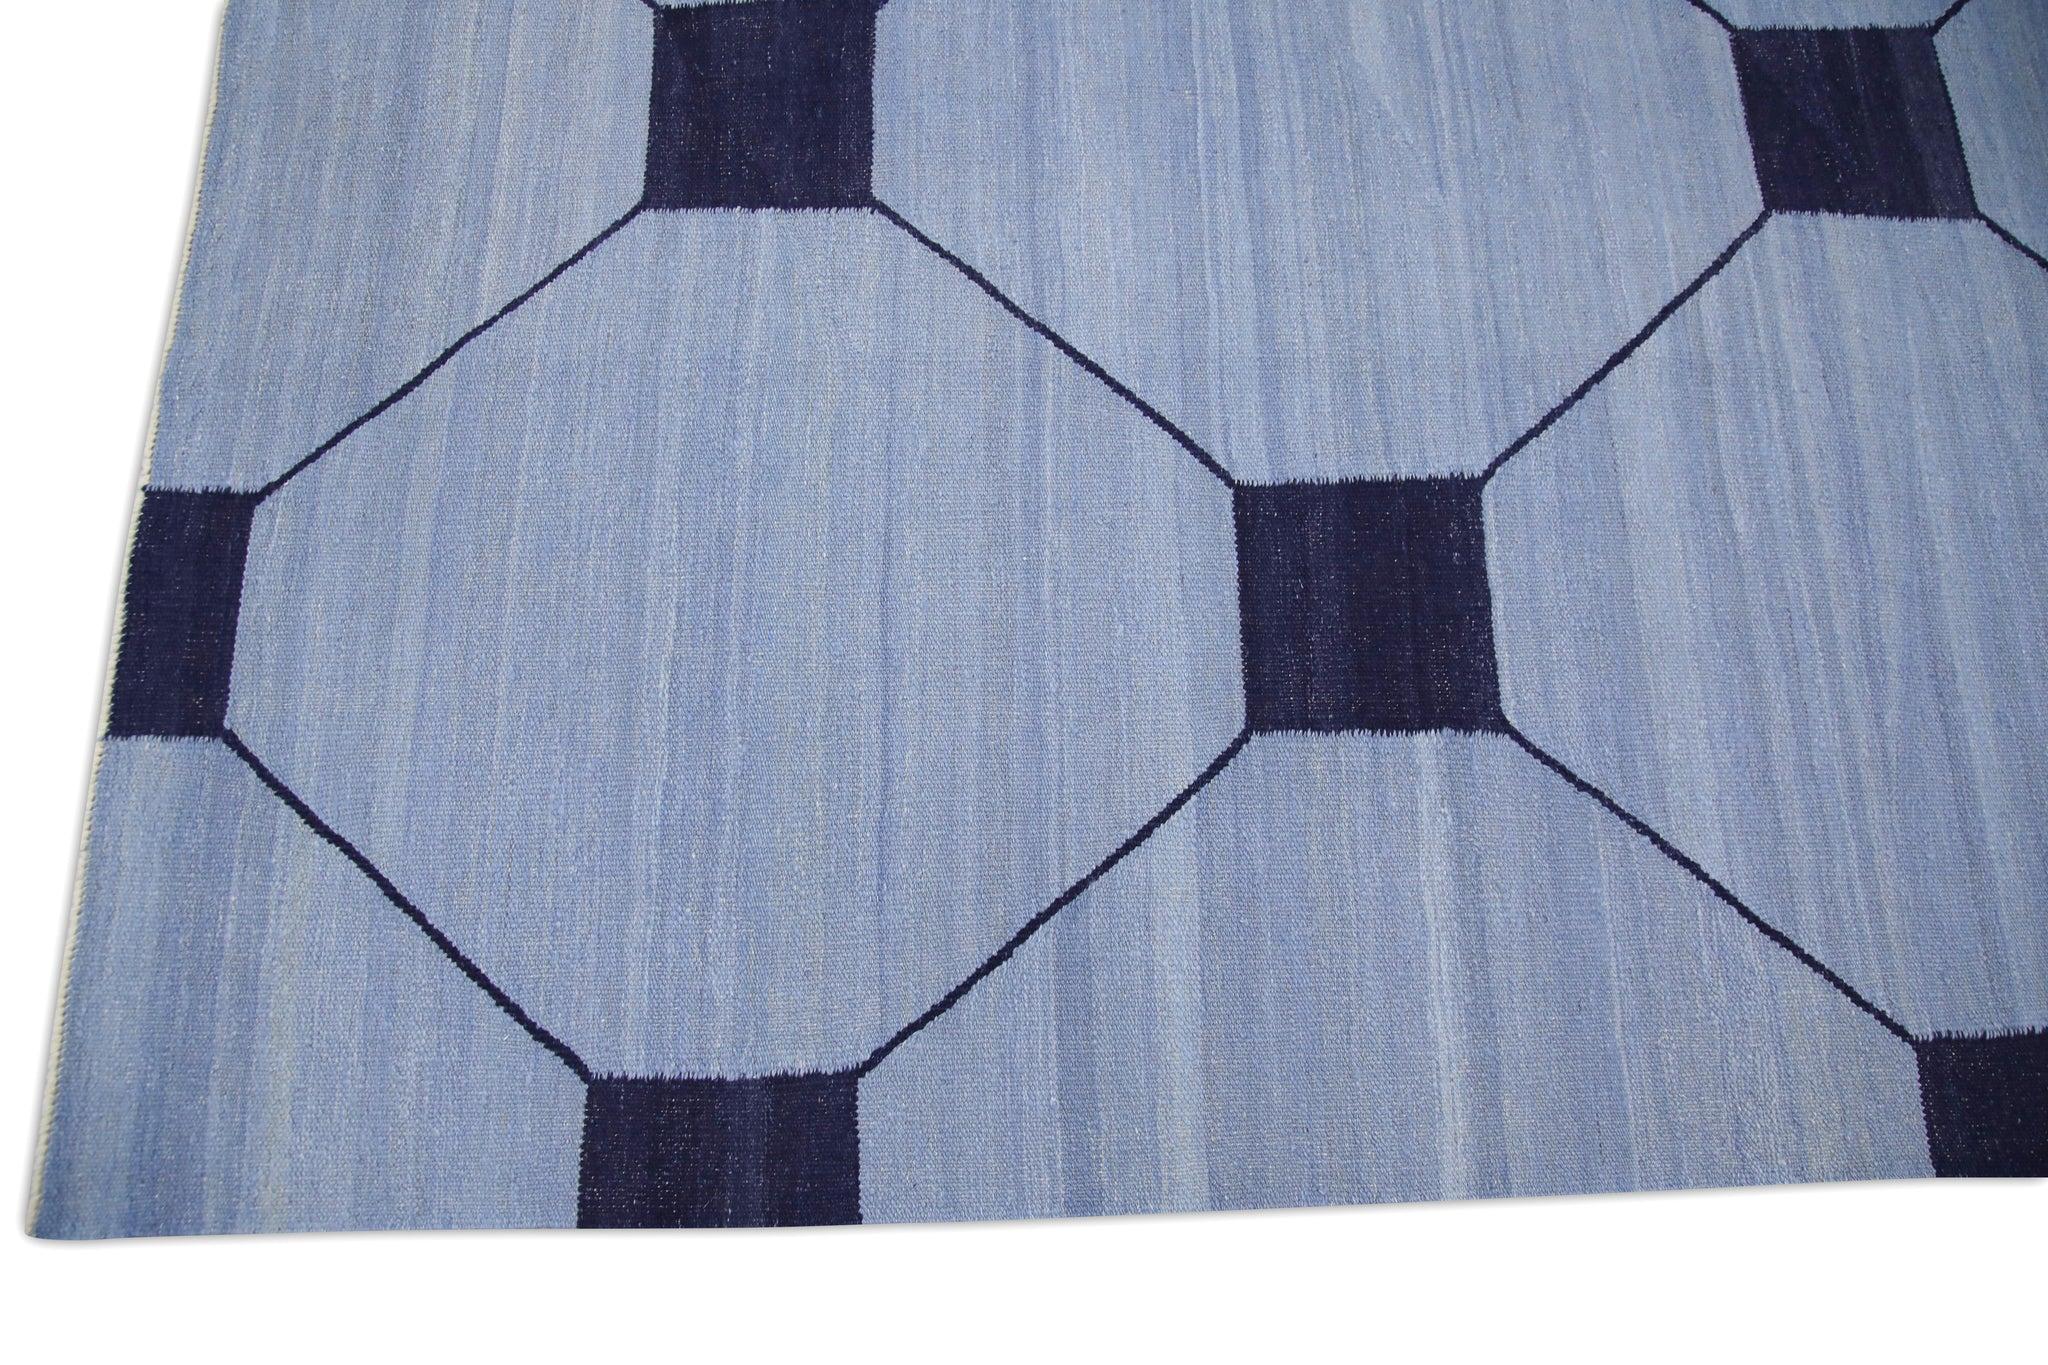 Turkish Blue Flatweave Handmade Wool Rug in Navy Geometric Design 9' x 12'7